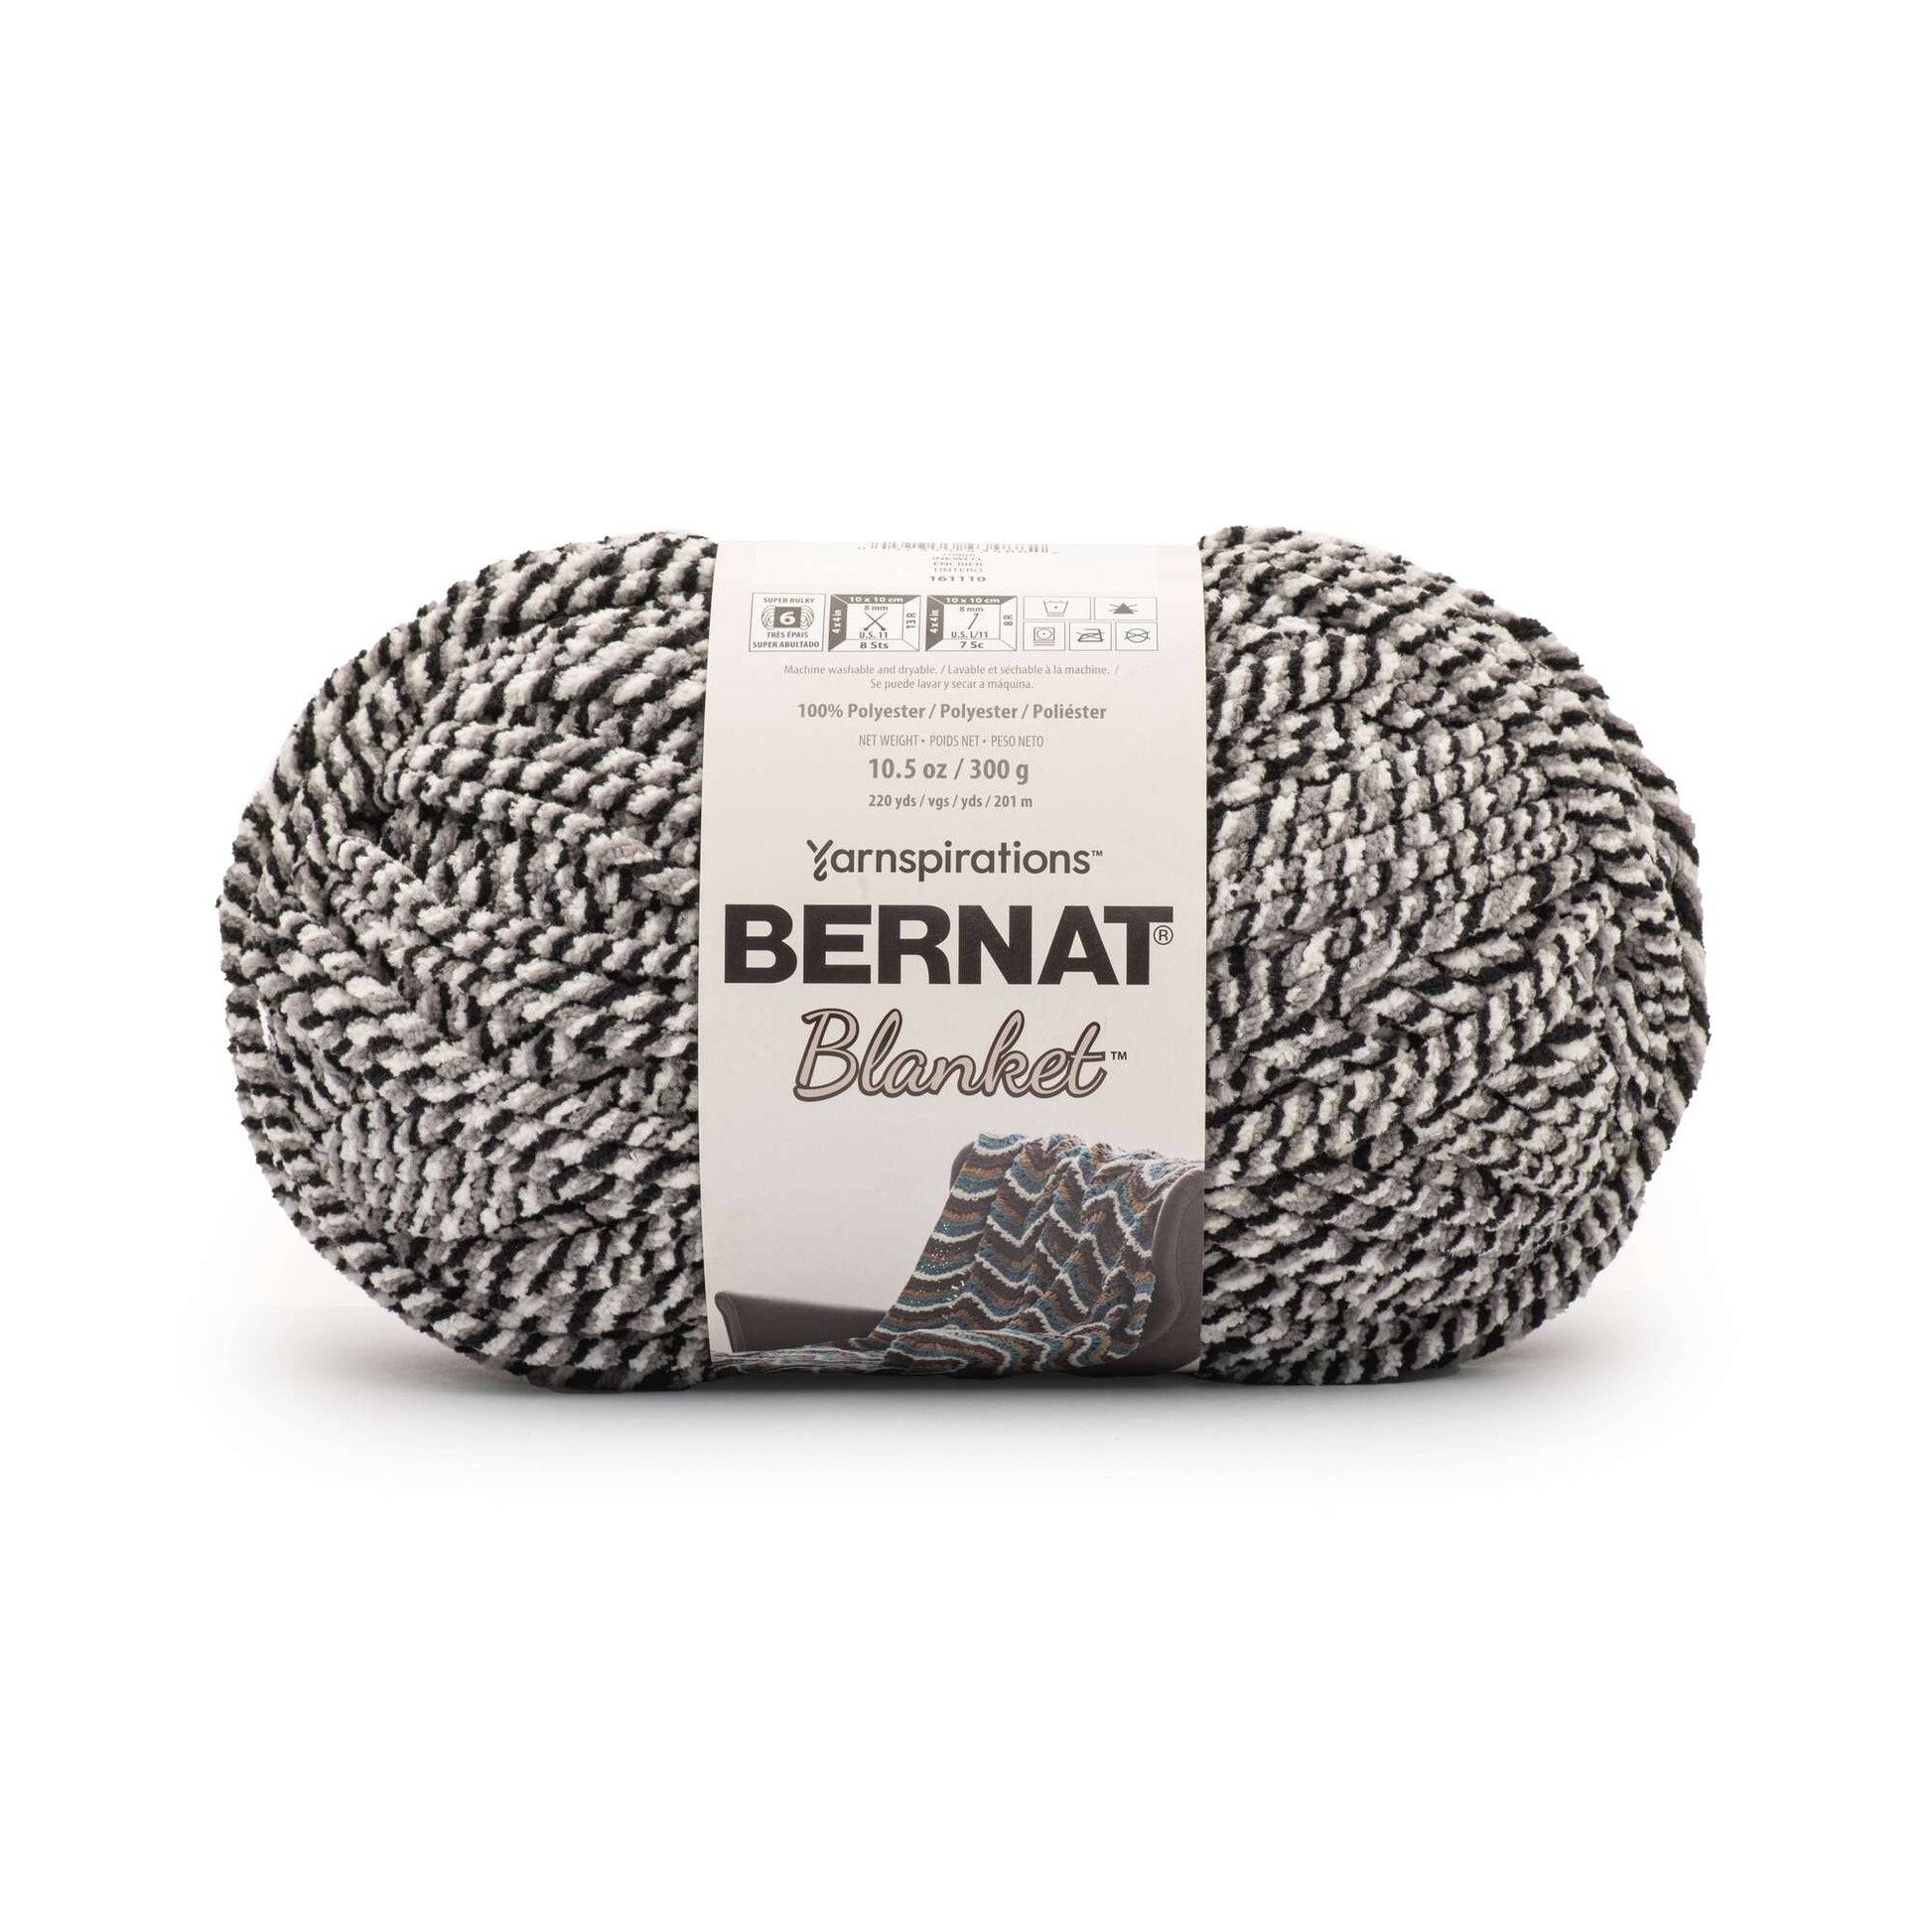 Bernat Blanket Yarn - Big Ball (10.5 oz) - 2 Pack with Patterns